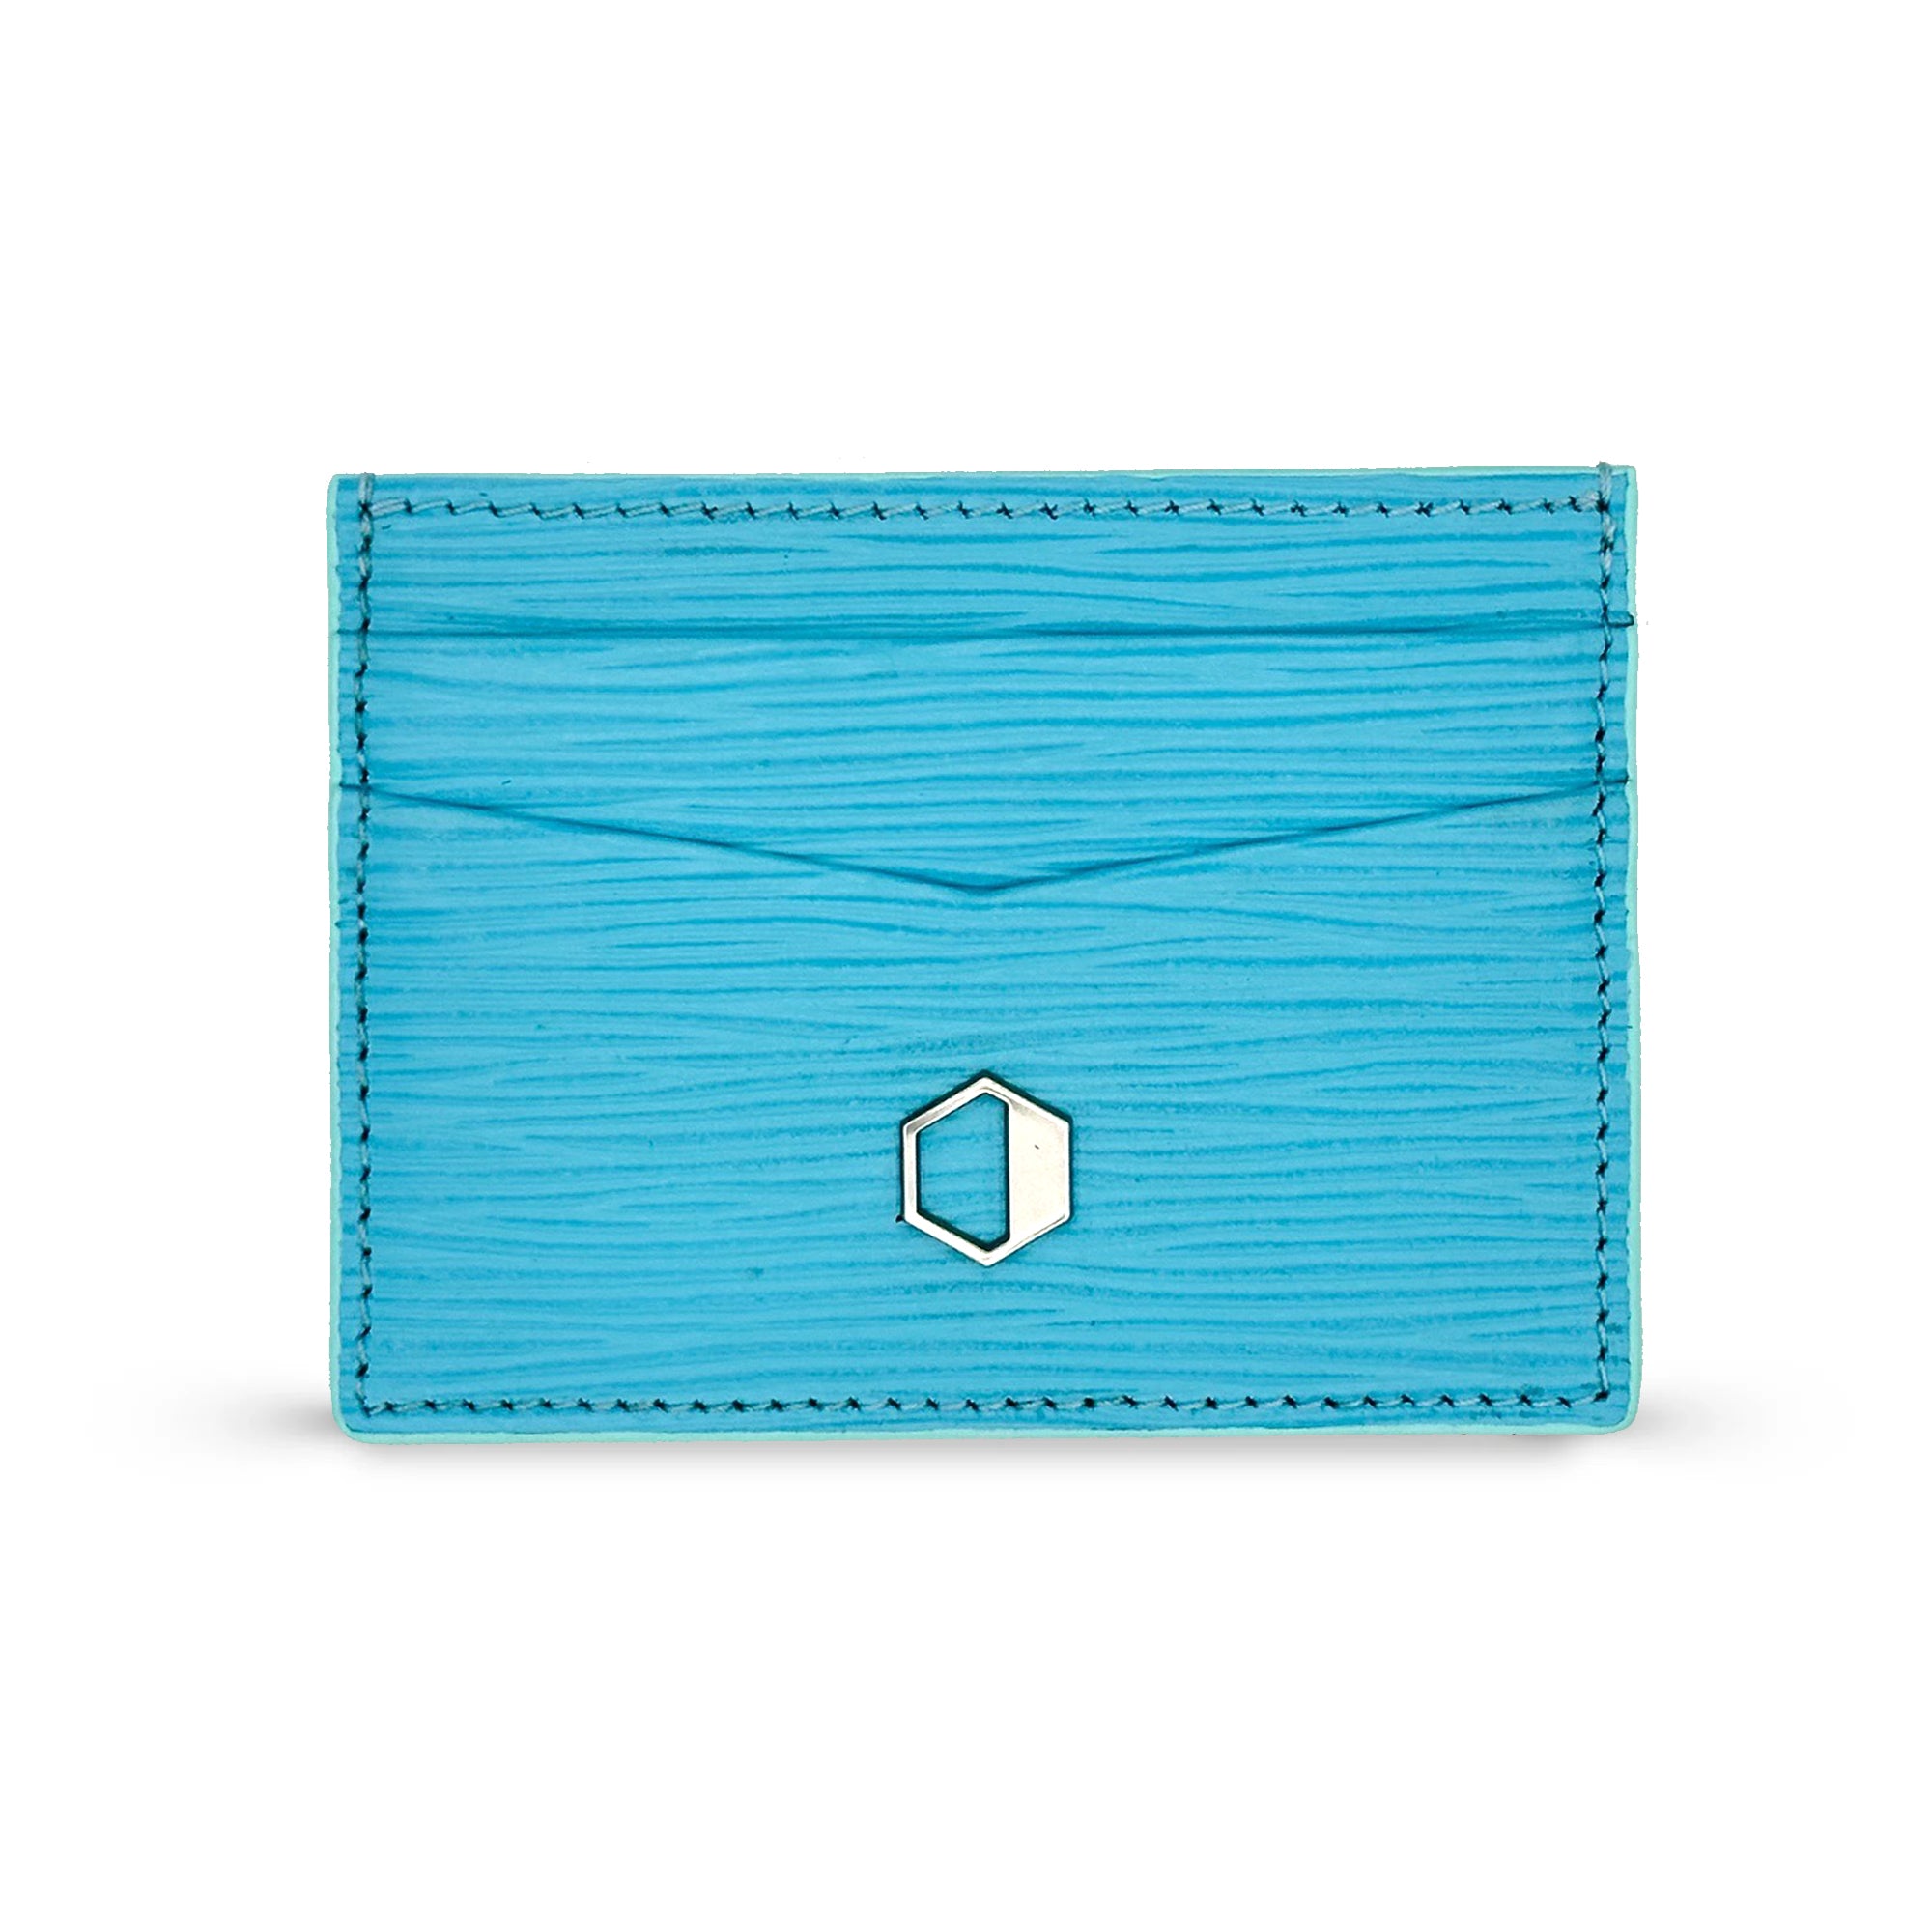 Tiffany Blue Leather Wallet